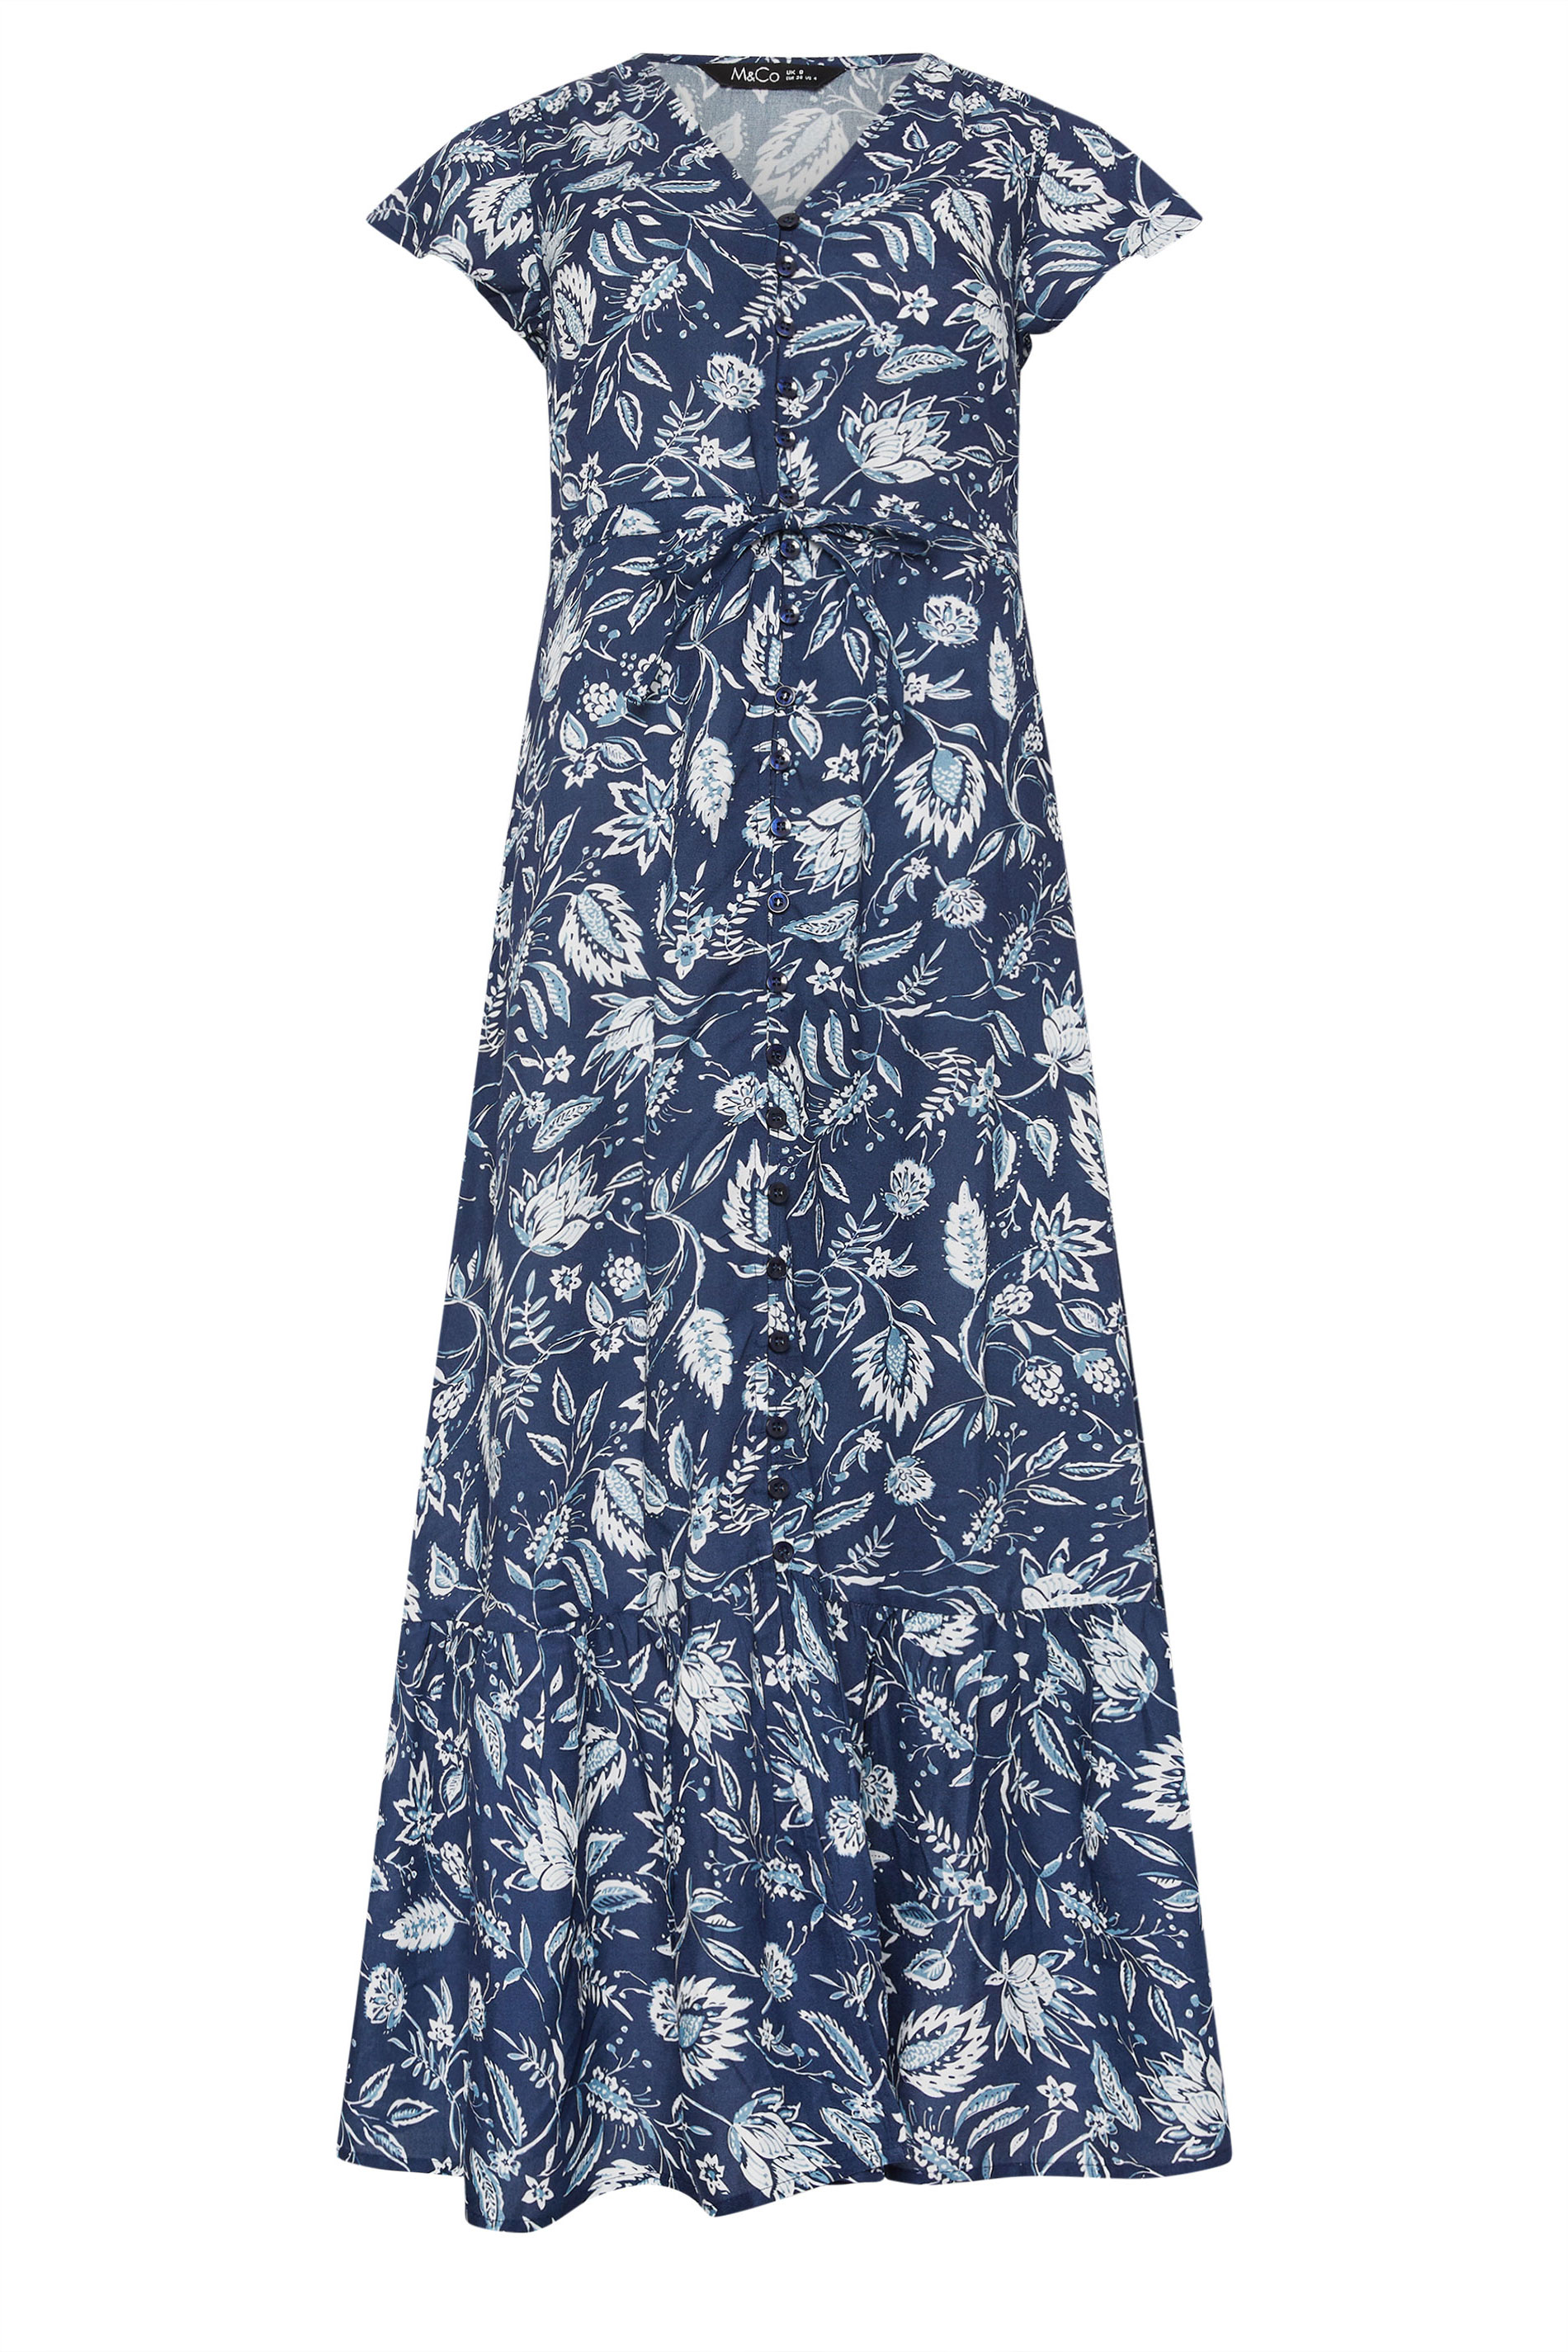 M&Co Petite Blue Floral Print Tiered Midi Dress | M&Co 1